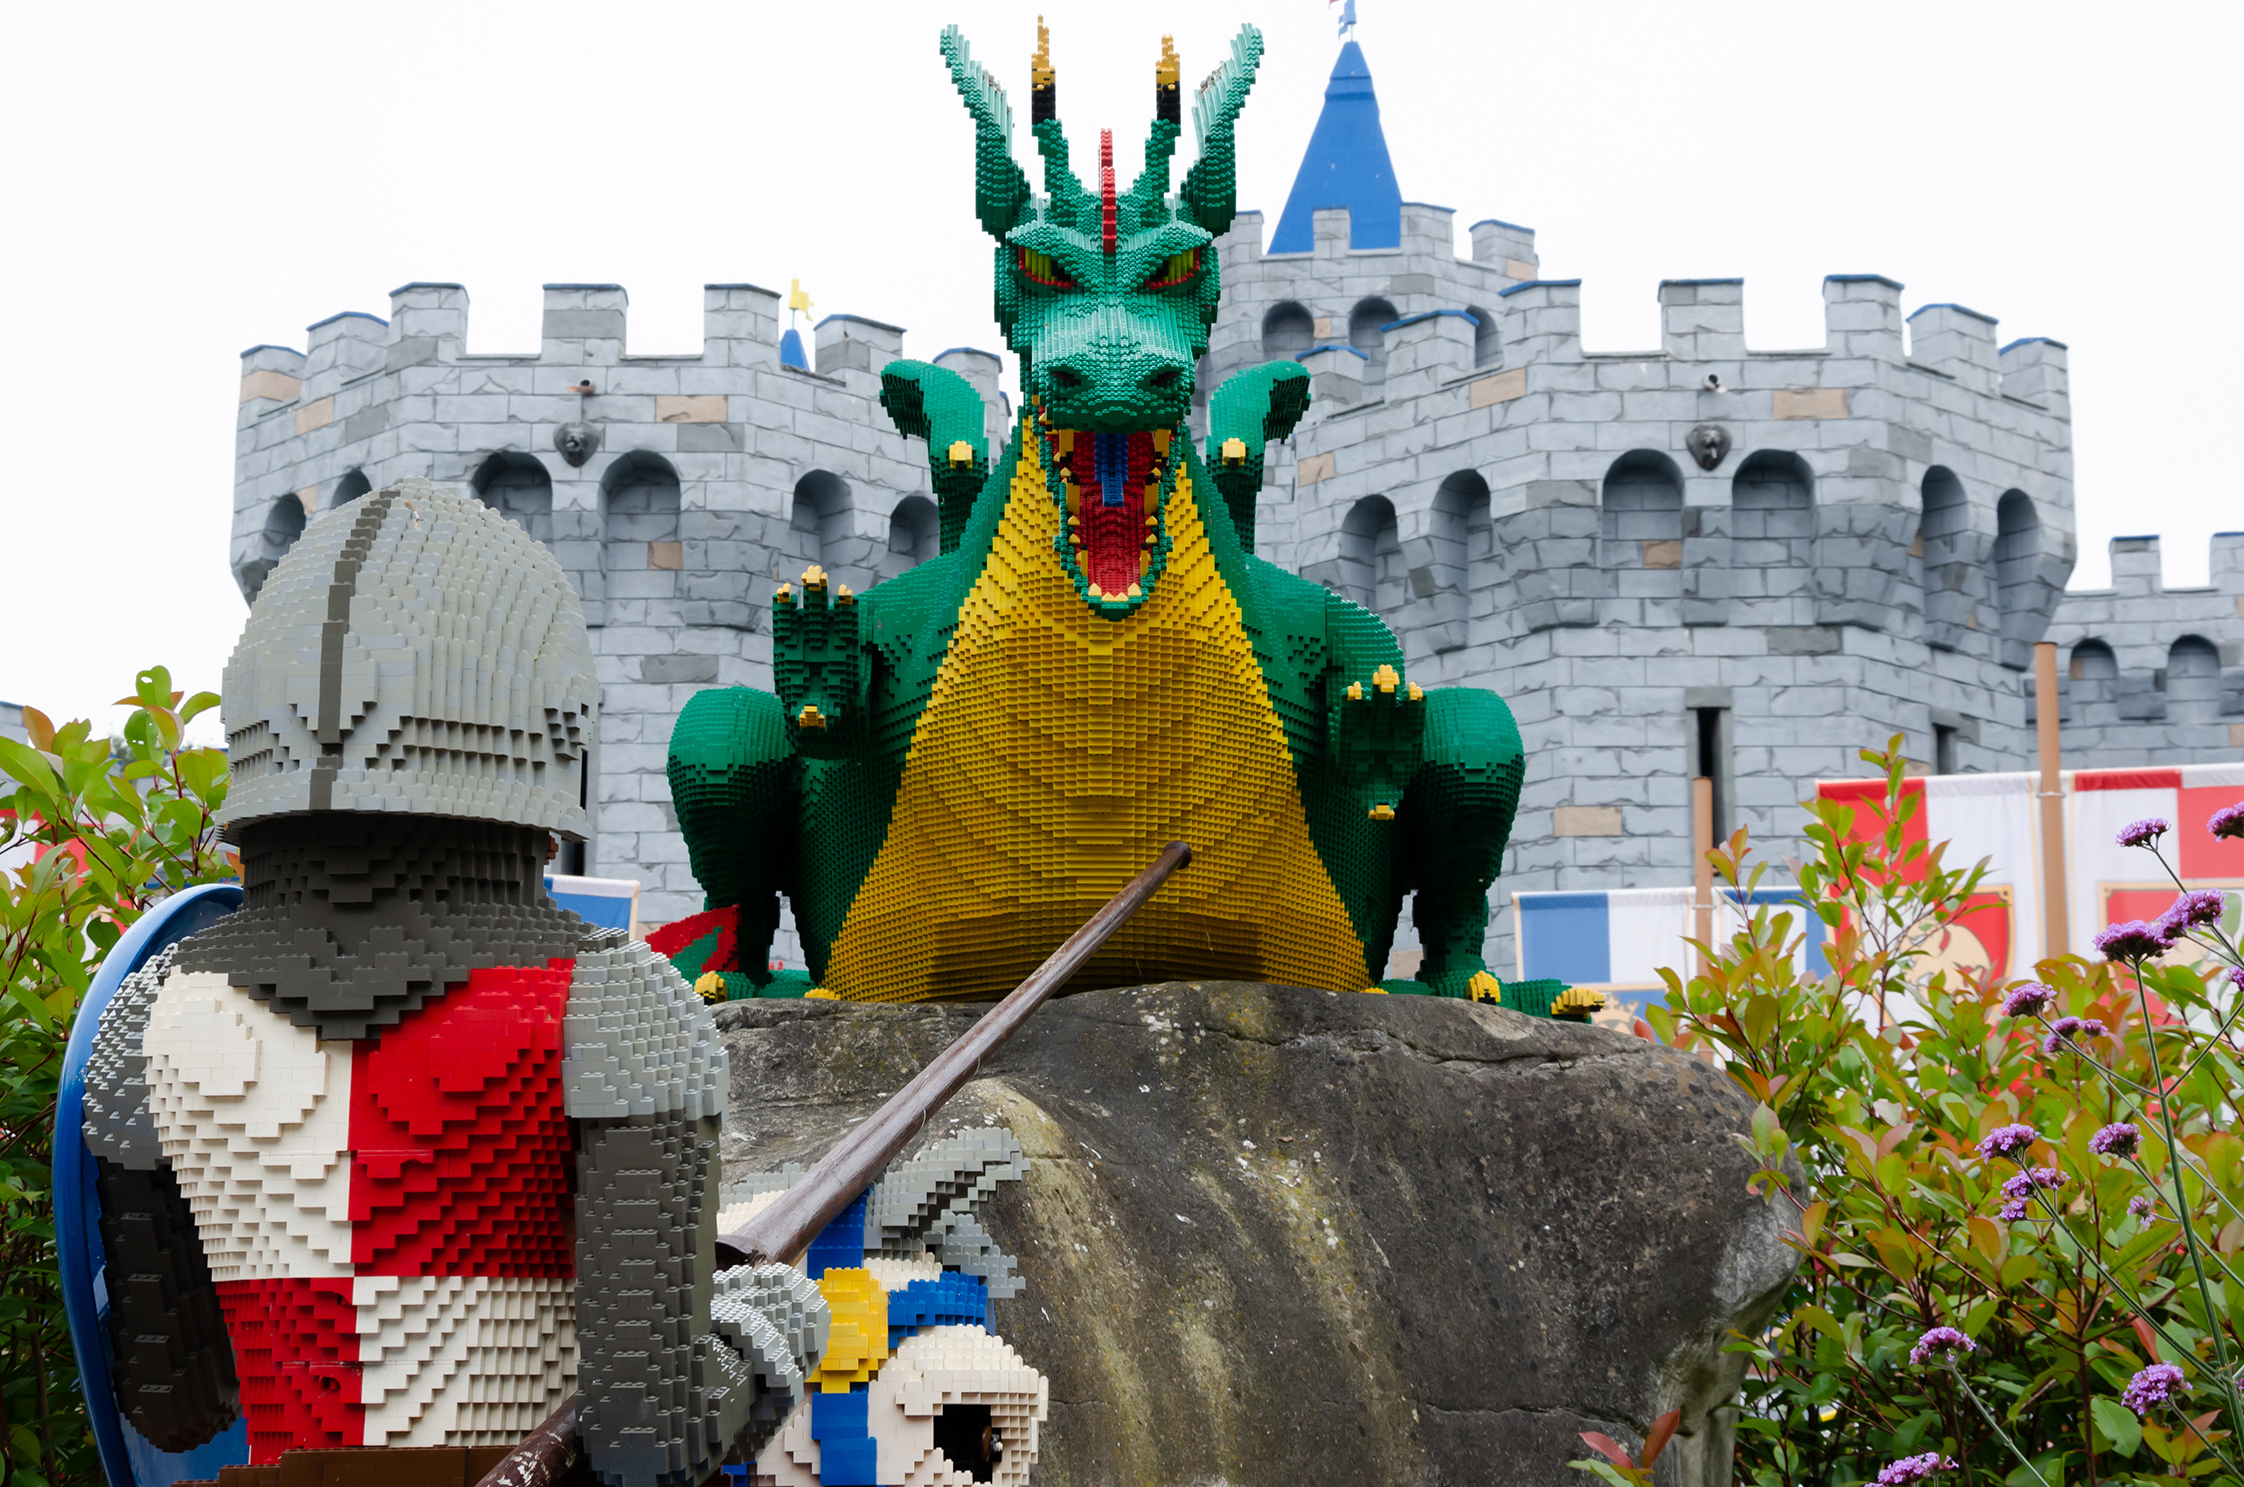 PTSG makes a visit to Legoland